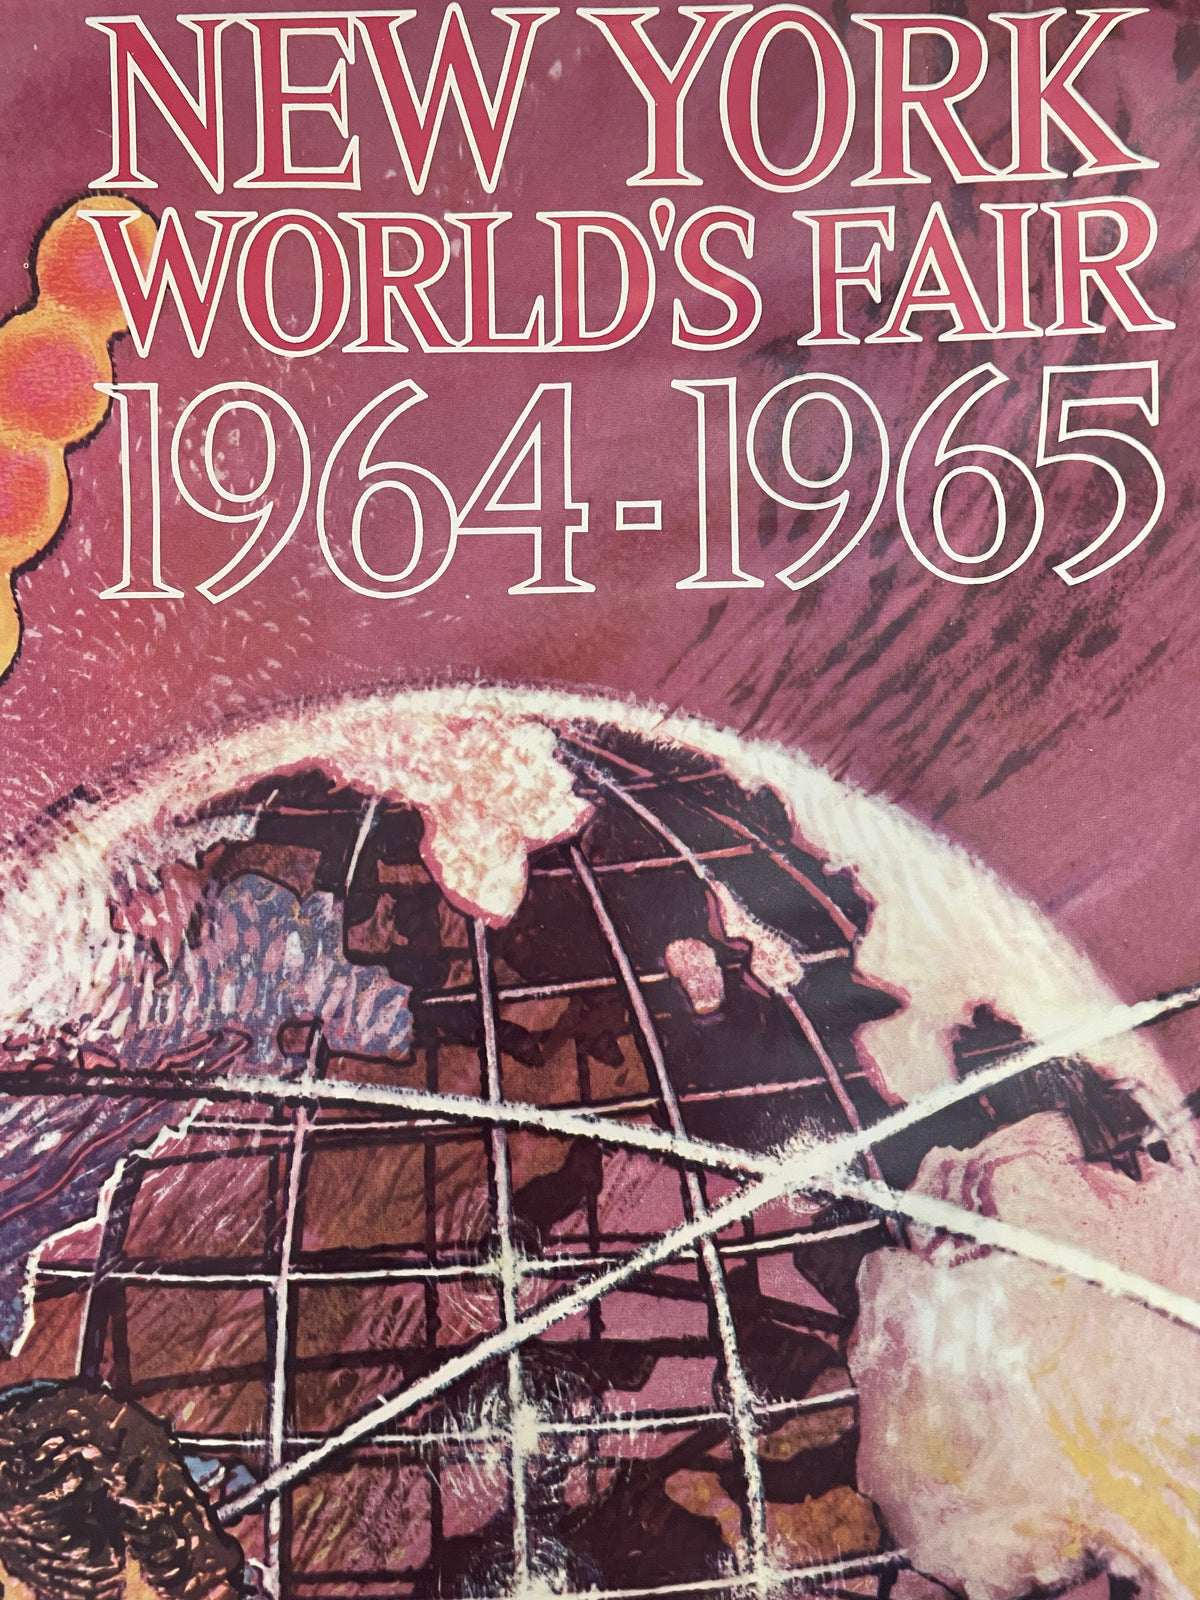 New York World's Fair by Peak